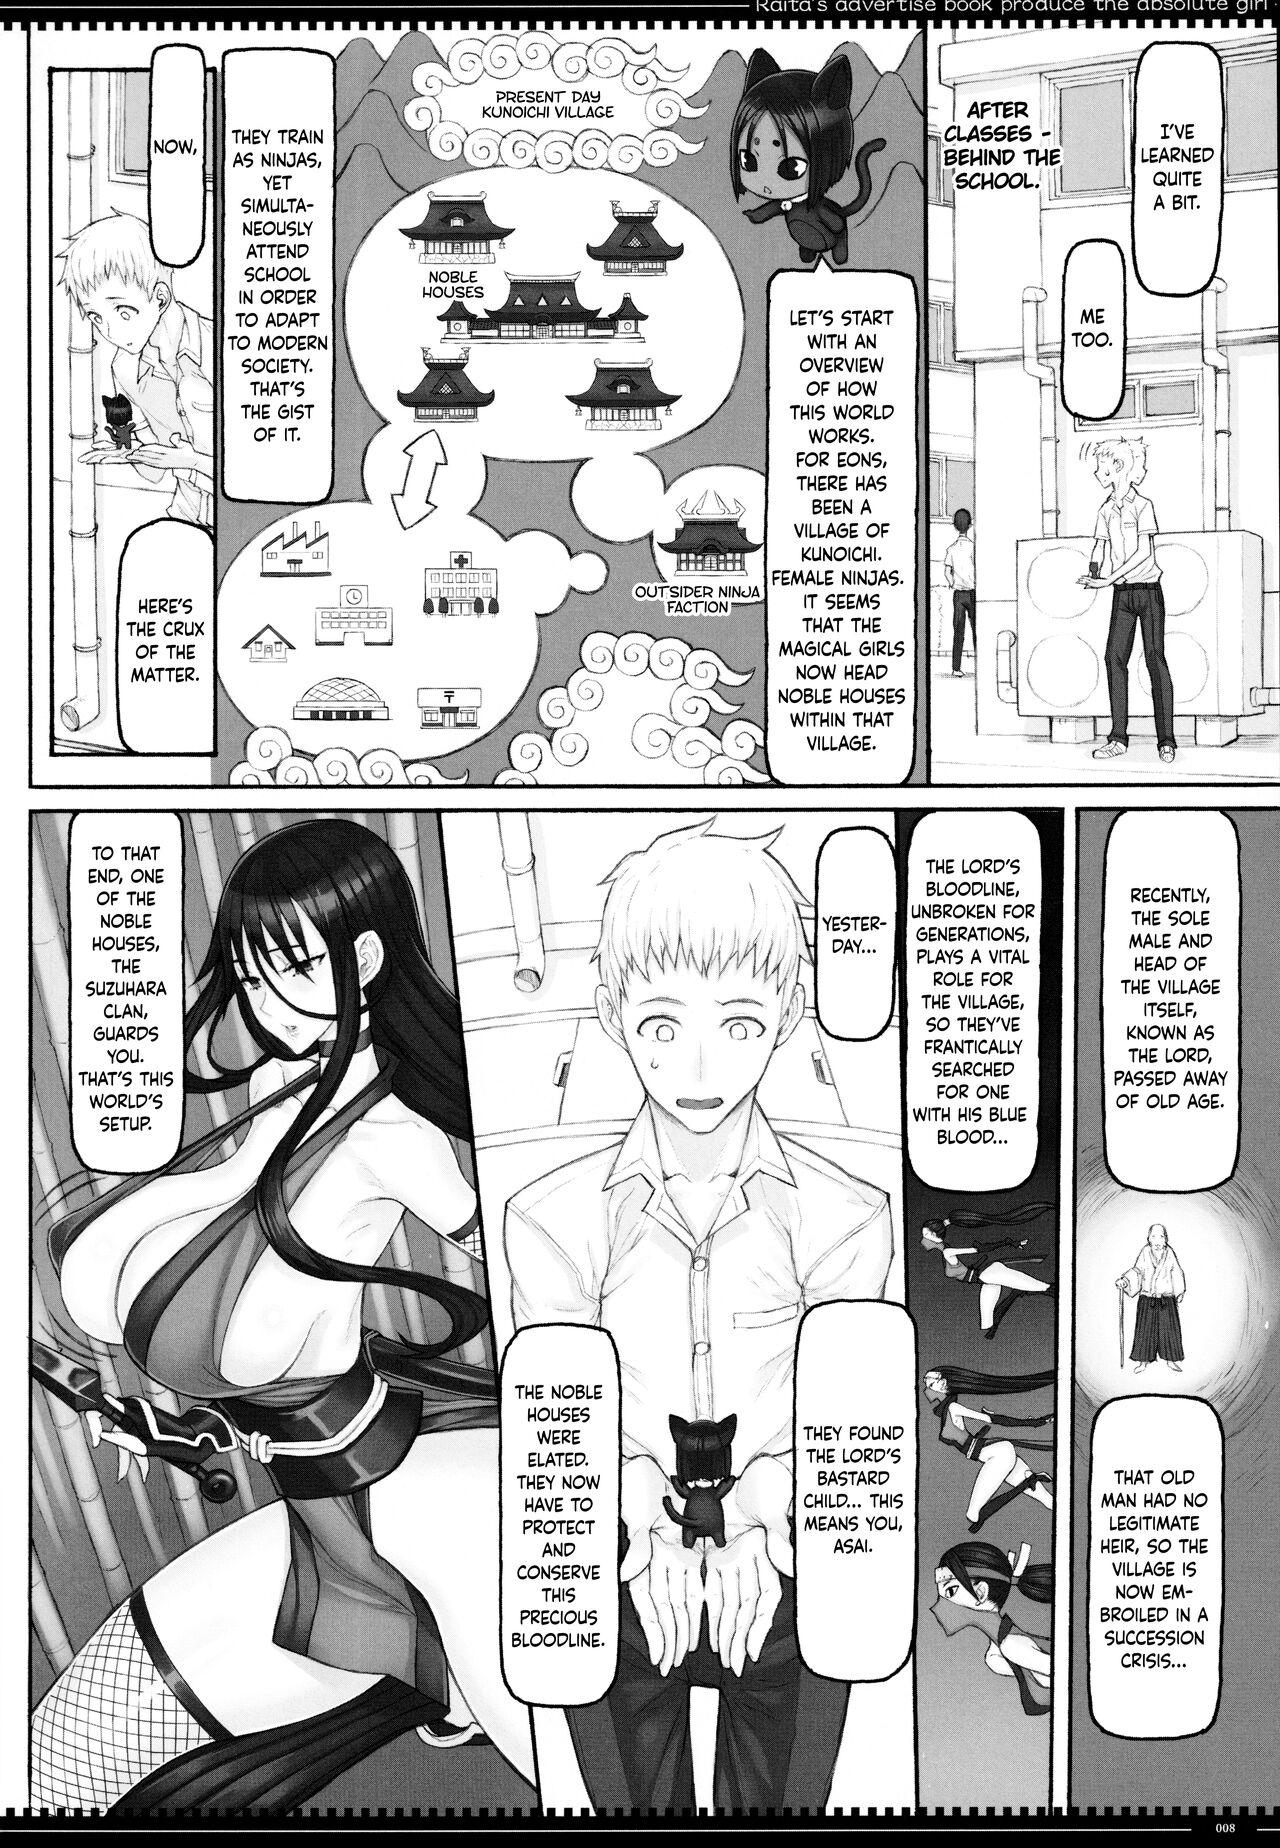 Seduction Mahou Shoujo 21.0 - Zettai junpaku mahou shoujo Nude - Page 7